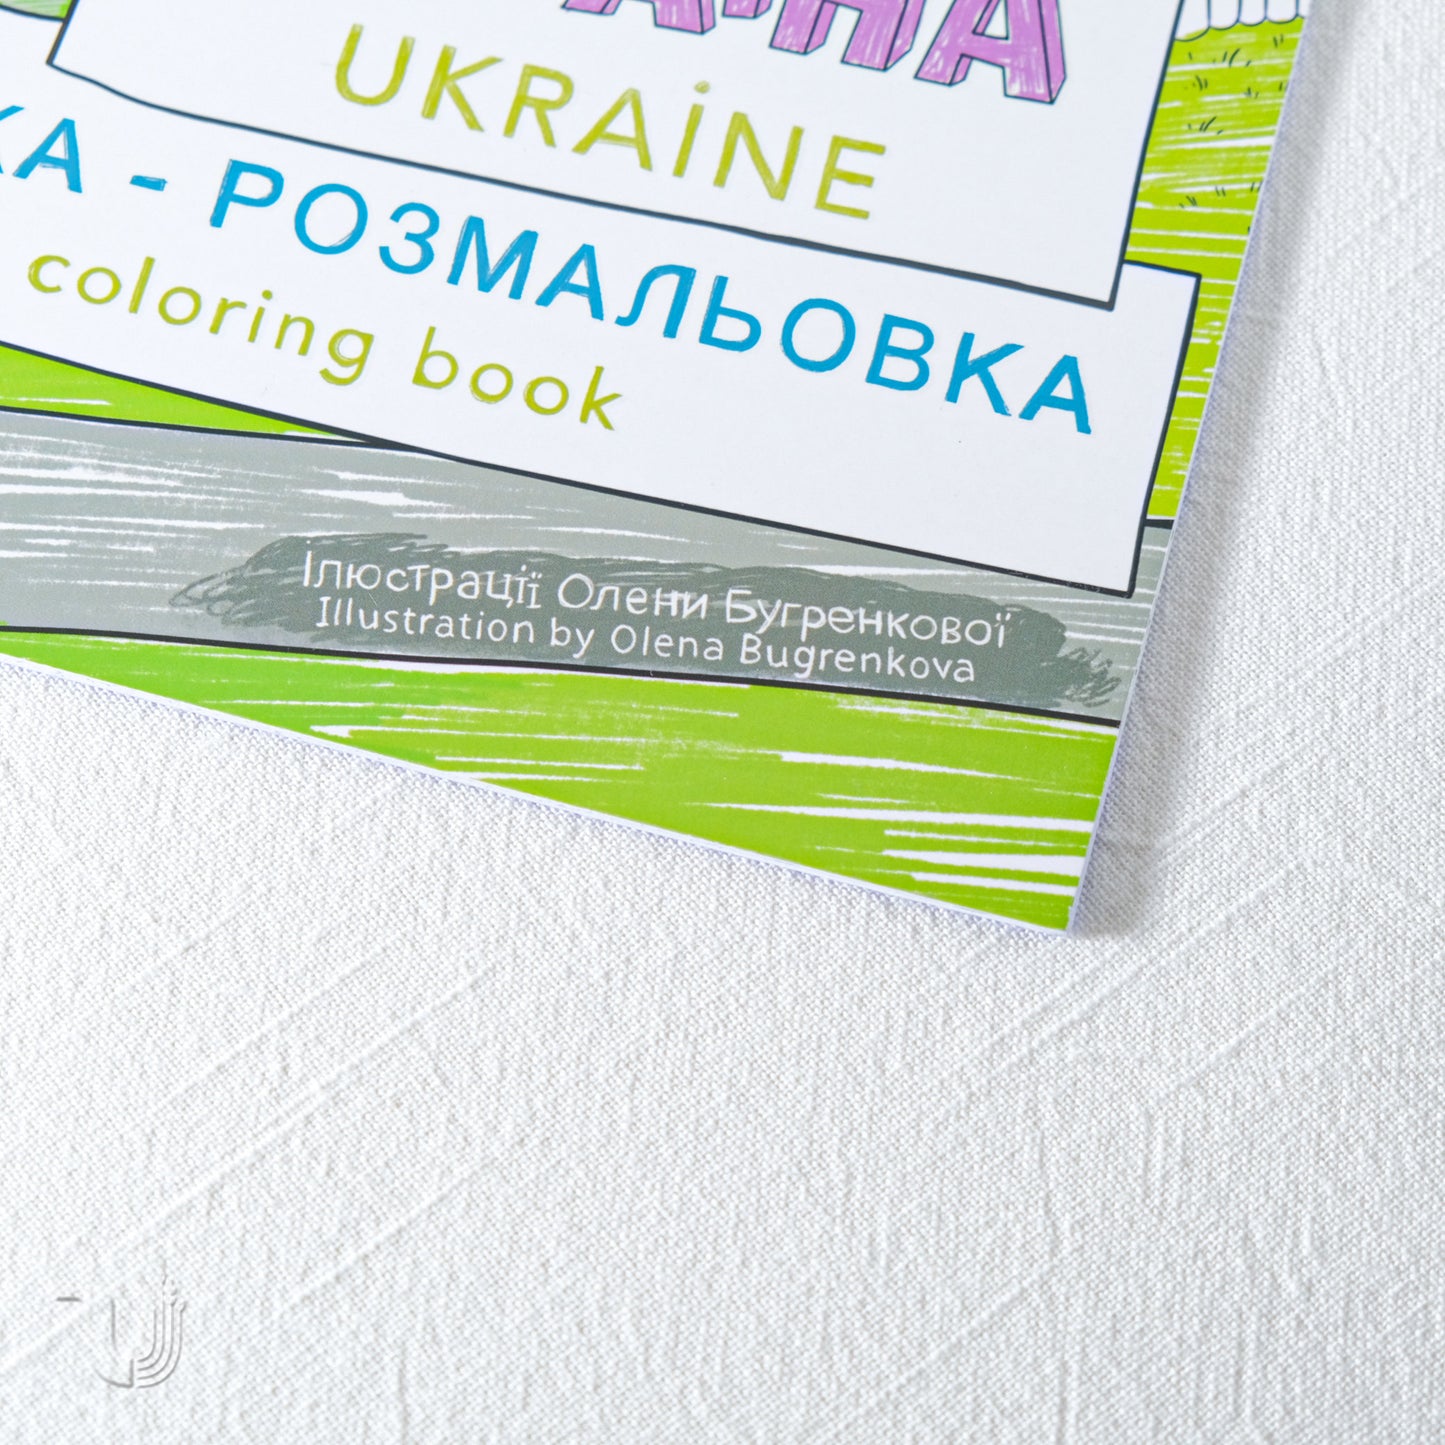 Coloring book "Ukraine"